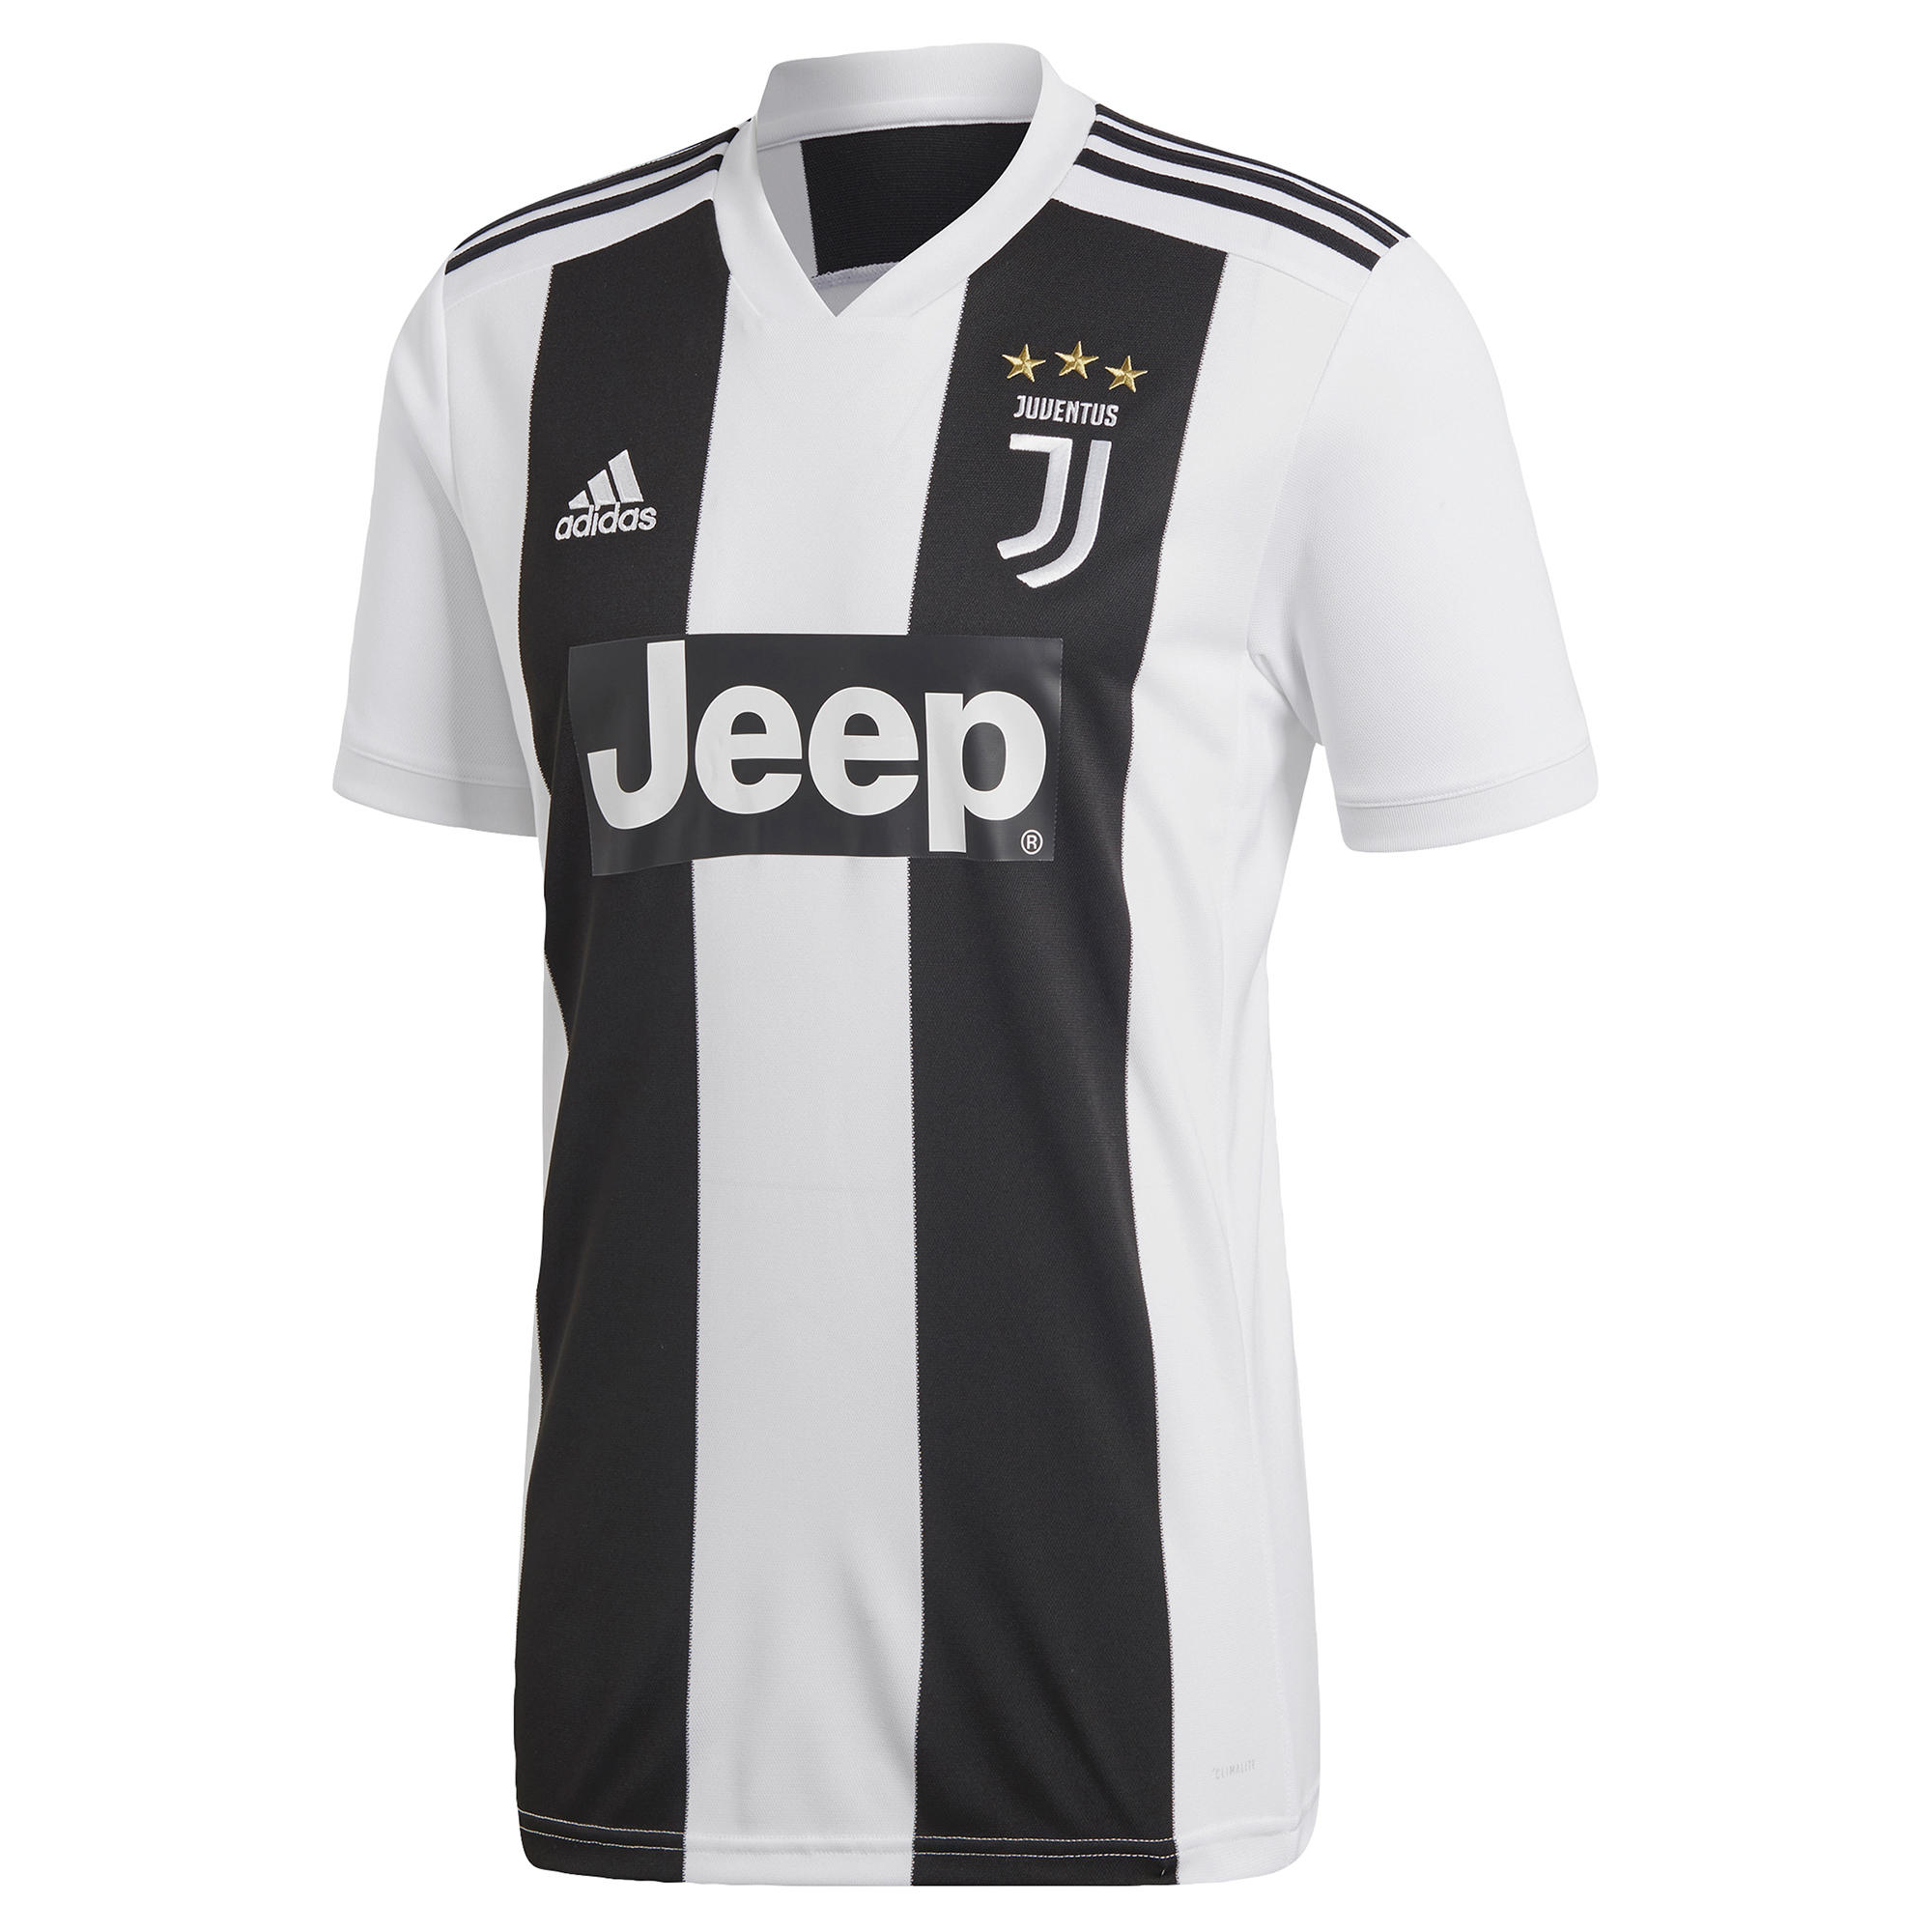 Juventus F.C. Kids' Replica Home Football Shirt - White/Black 1/1